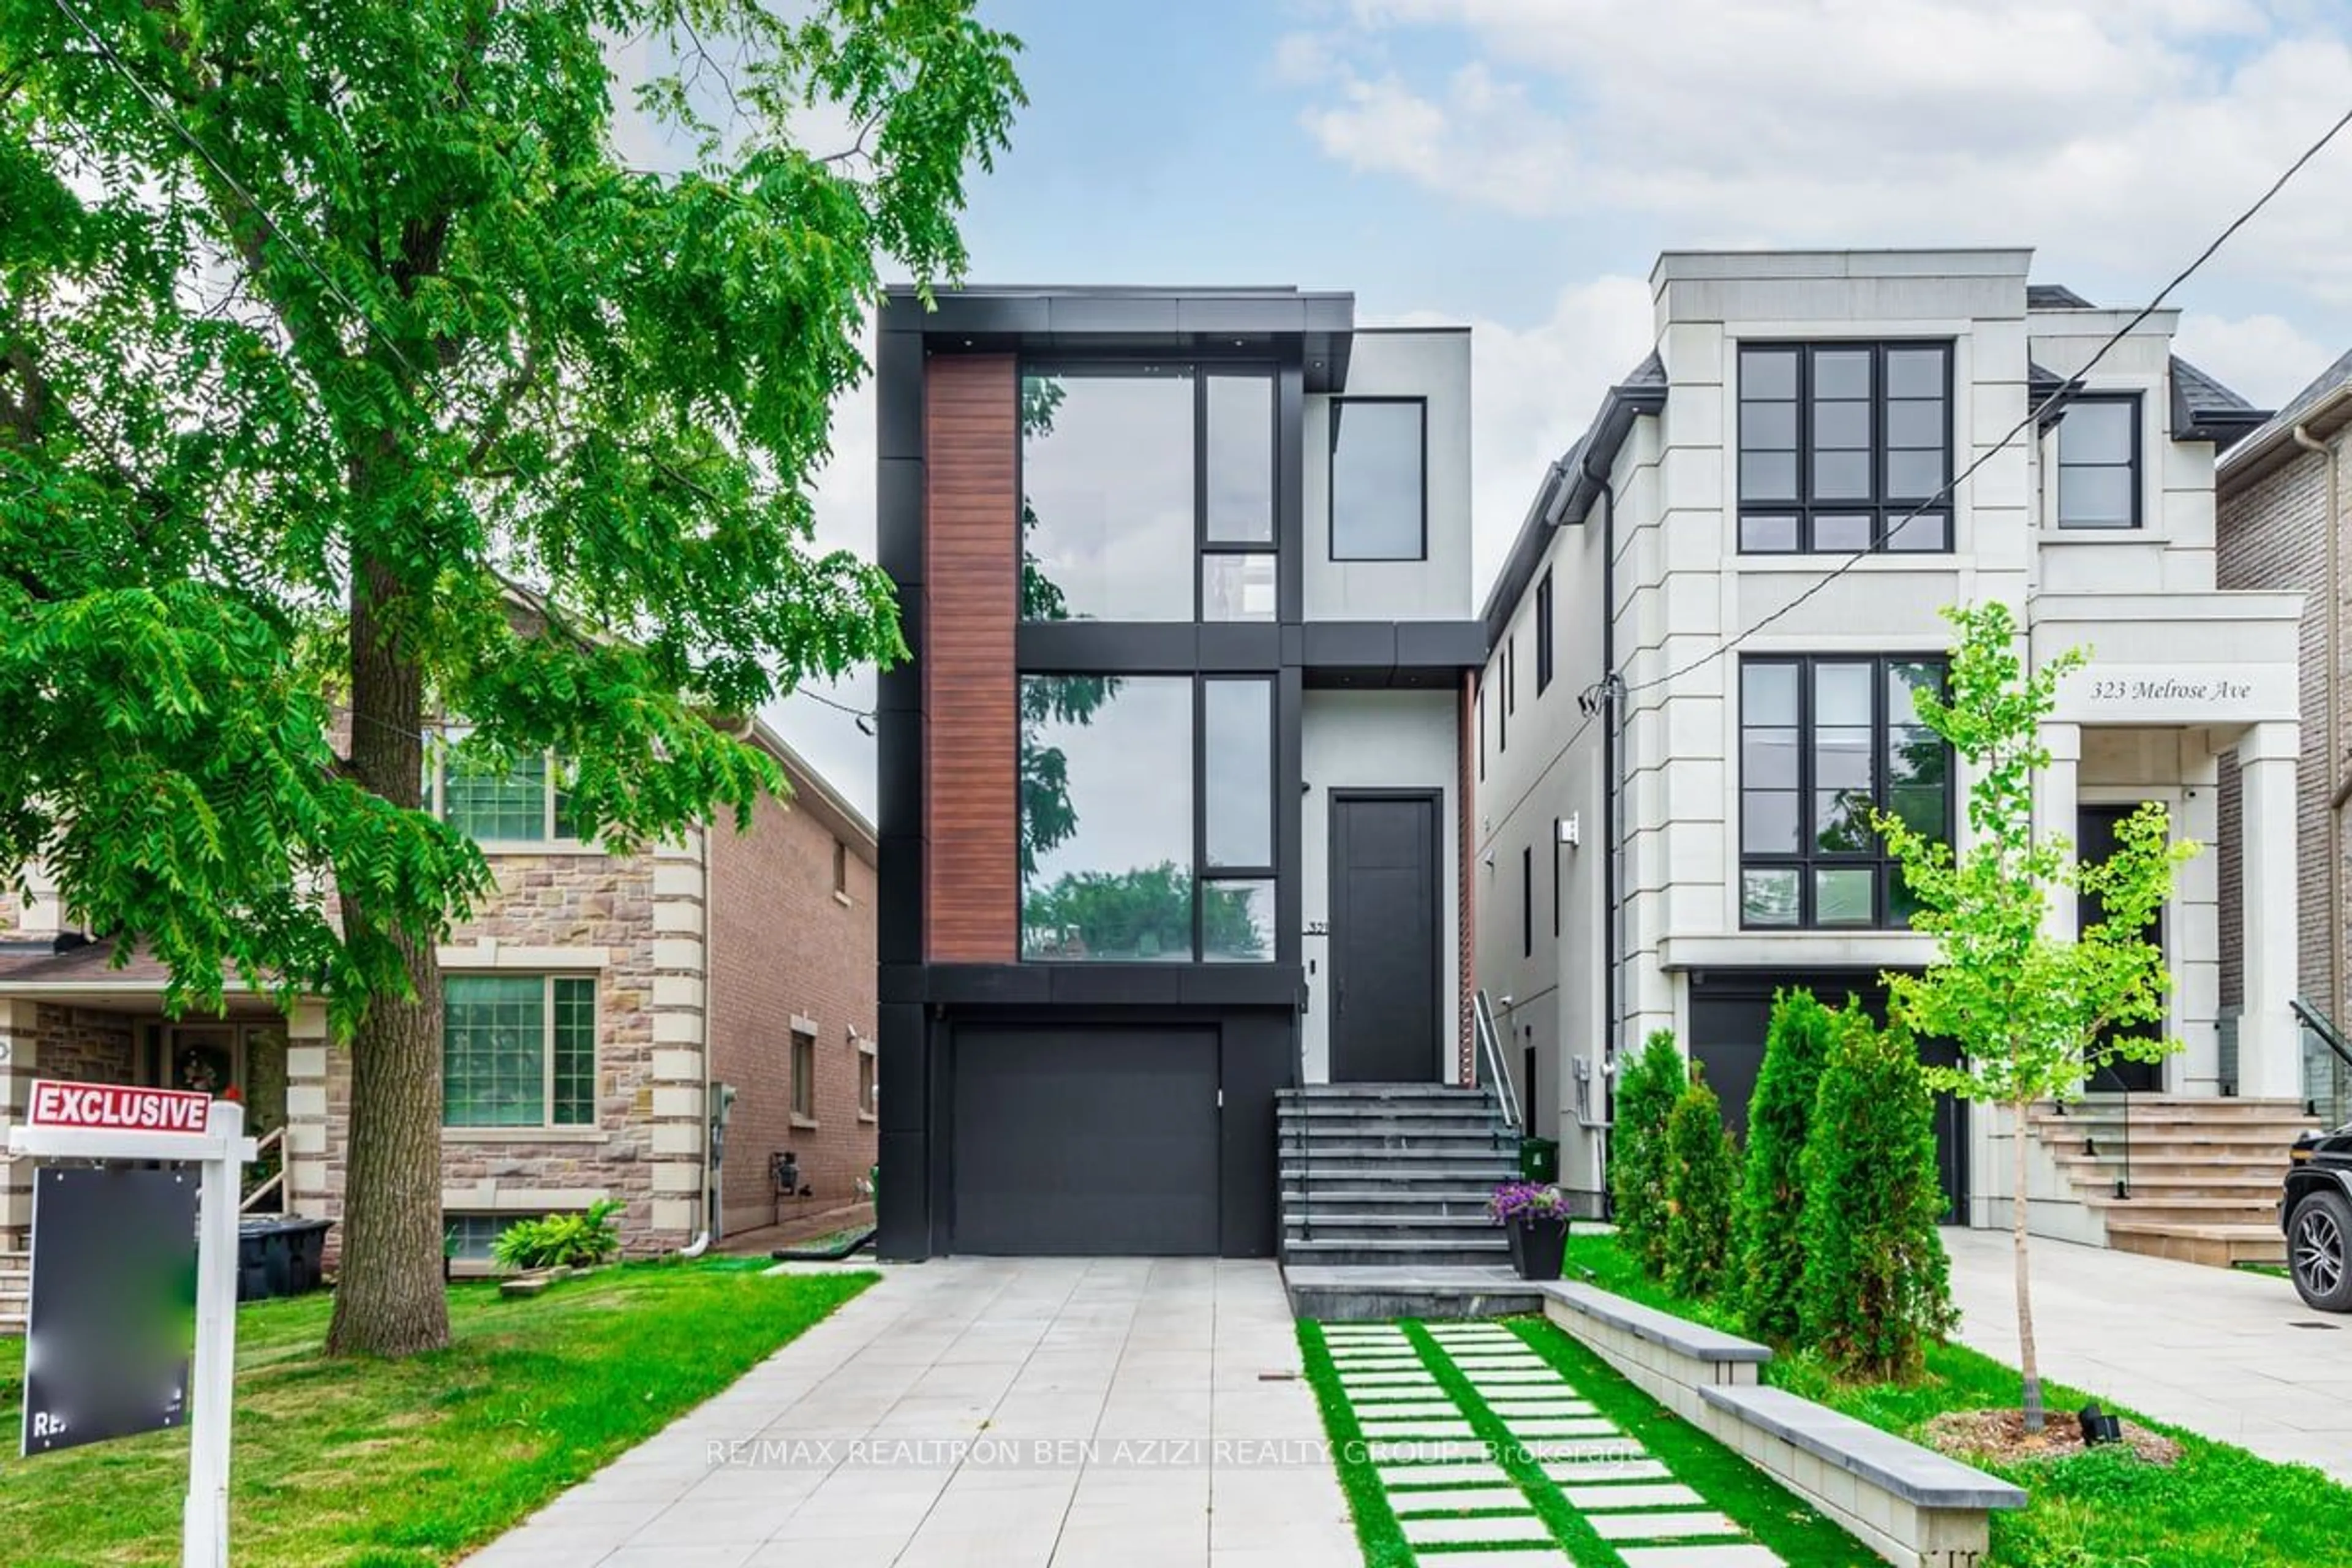 Home with brick exterior material for 321 Melrose Ave, Toronto Ontario M5M 1Z1